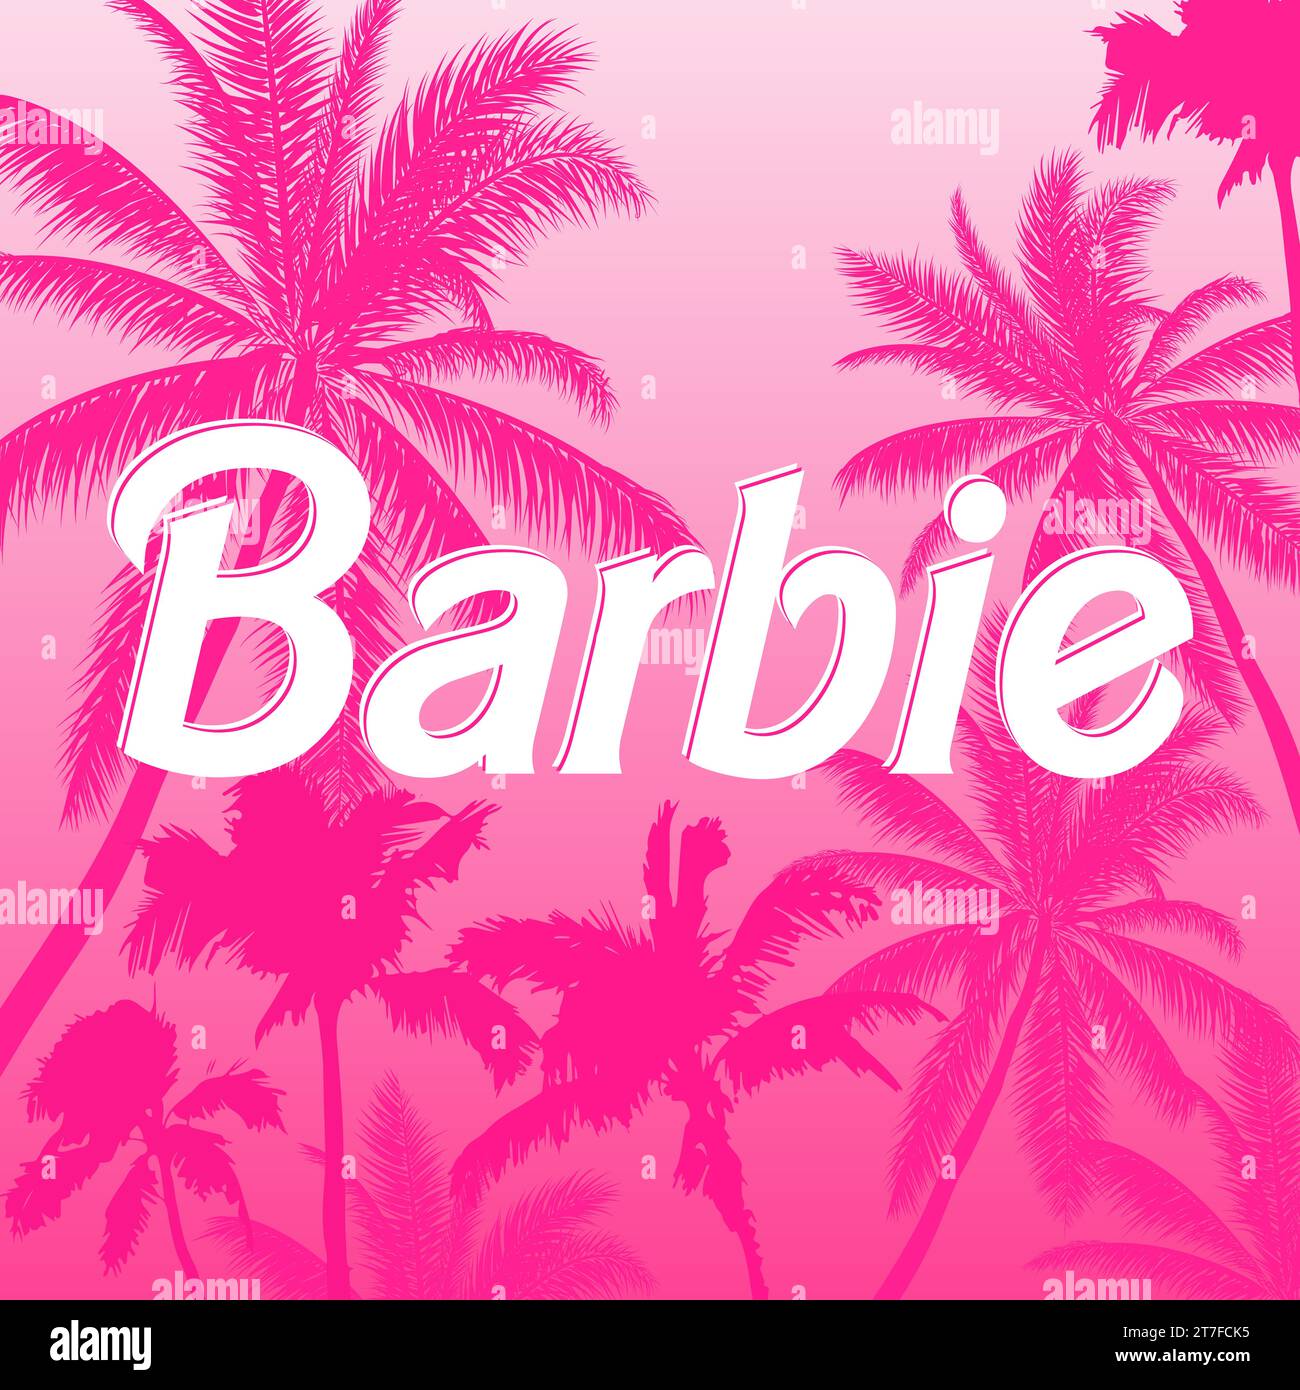 Barbie logo on a pink background,vector illustration Stock Vector Image ...